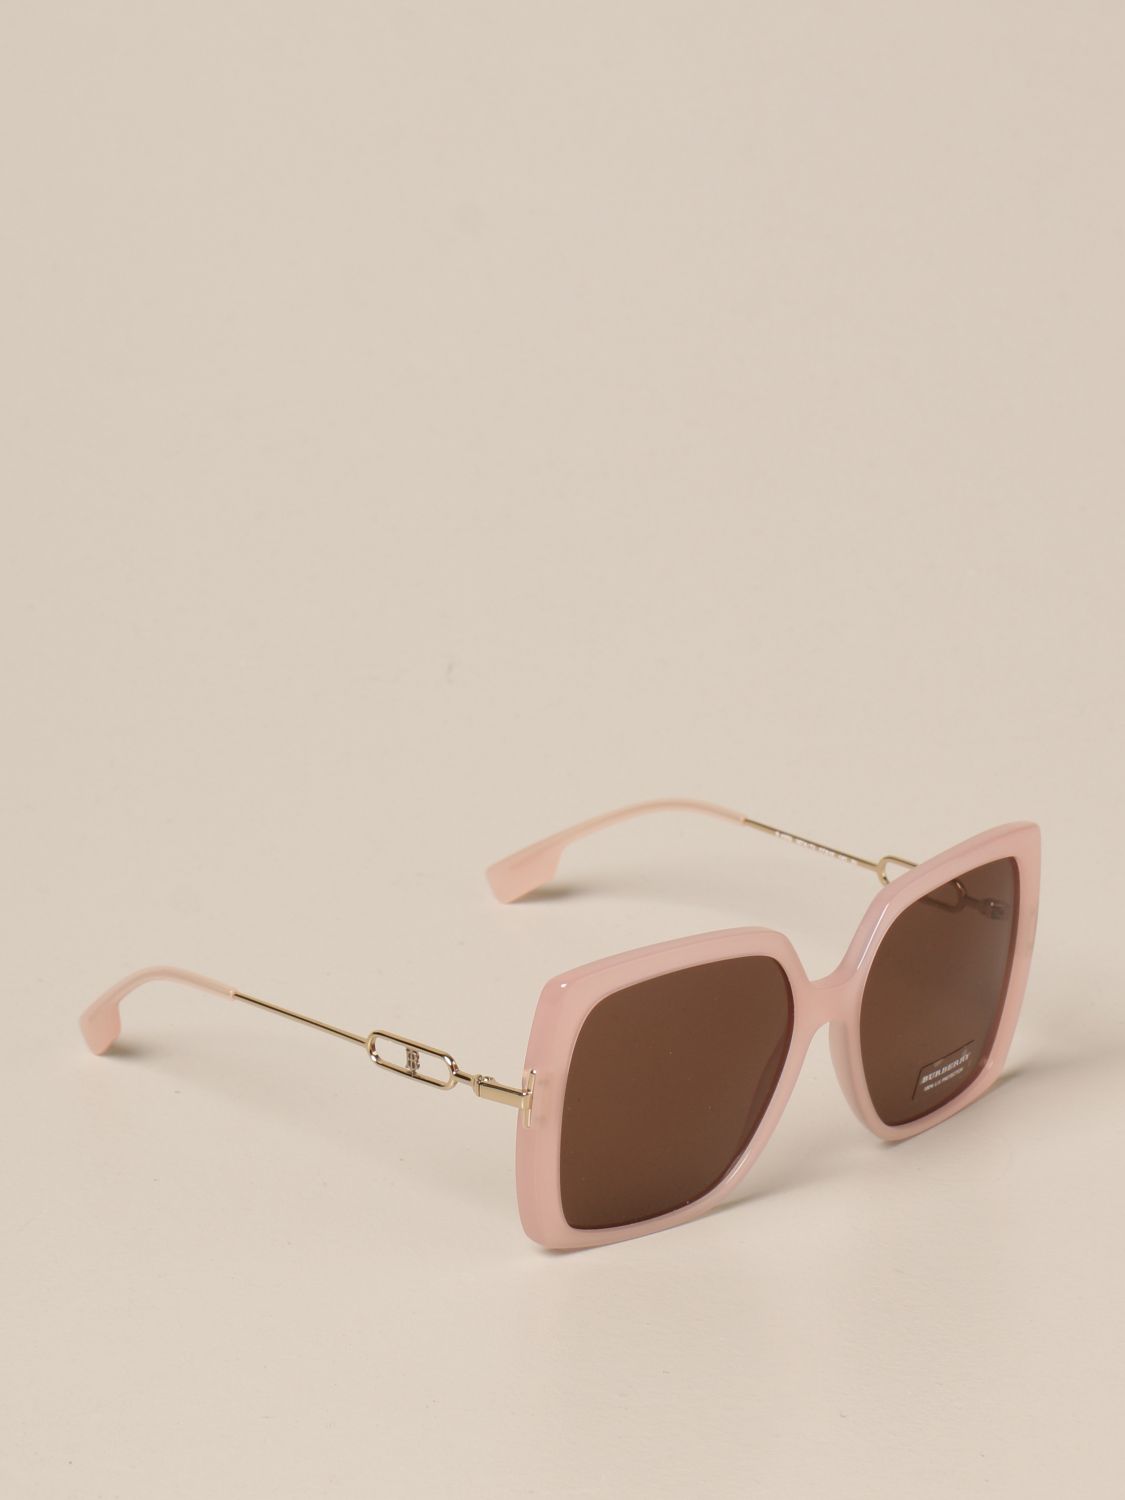 Actualizar 33+ imagen burberry pink sunglasses - Abzlocal.mx